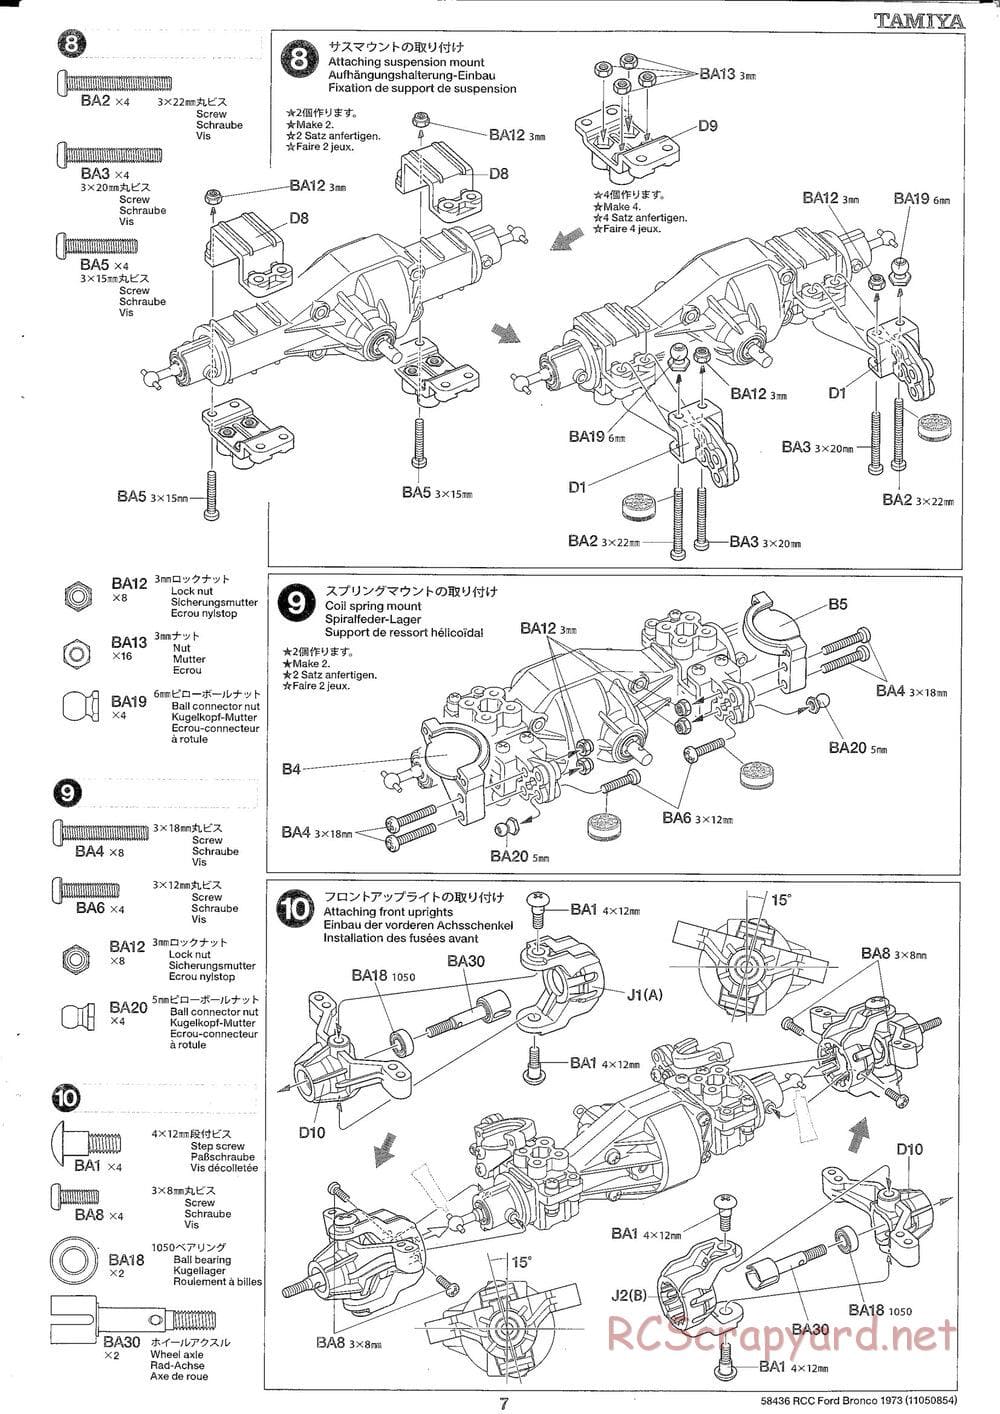 Tamiya - Ford Bronco 1973 - CR-01 Chassis - Manual - Page 7